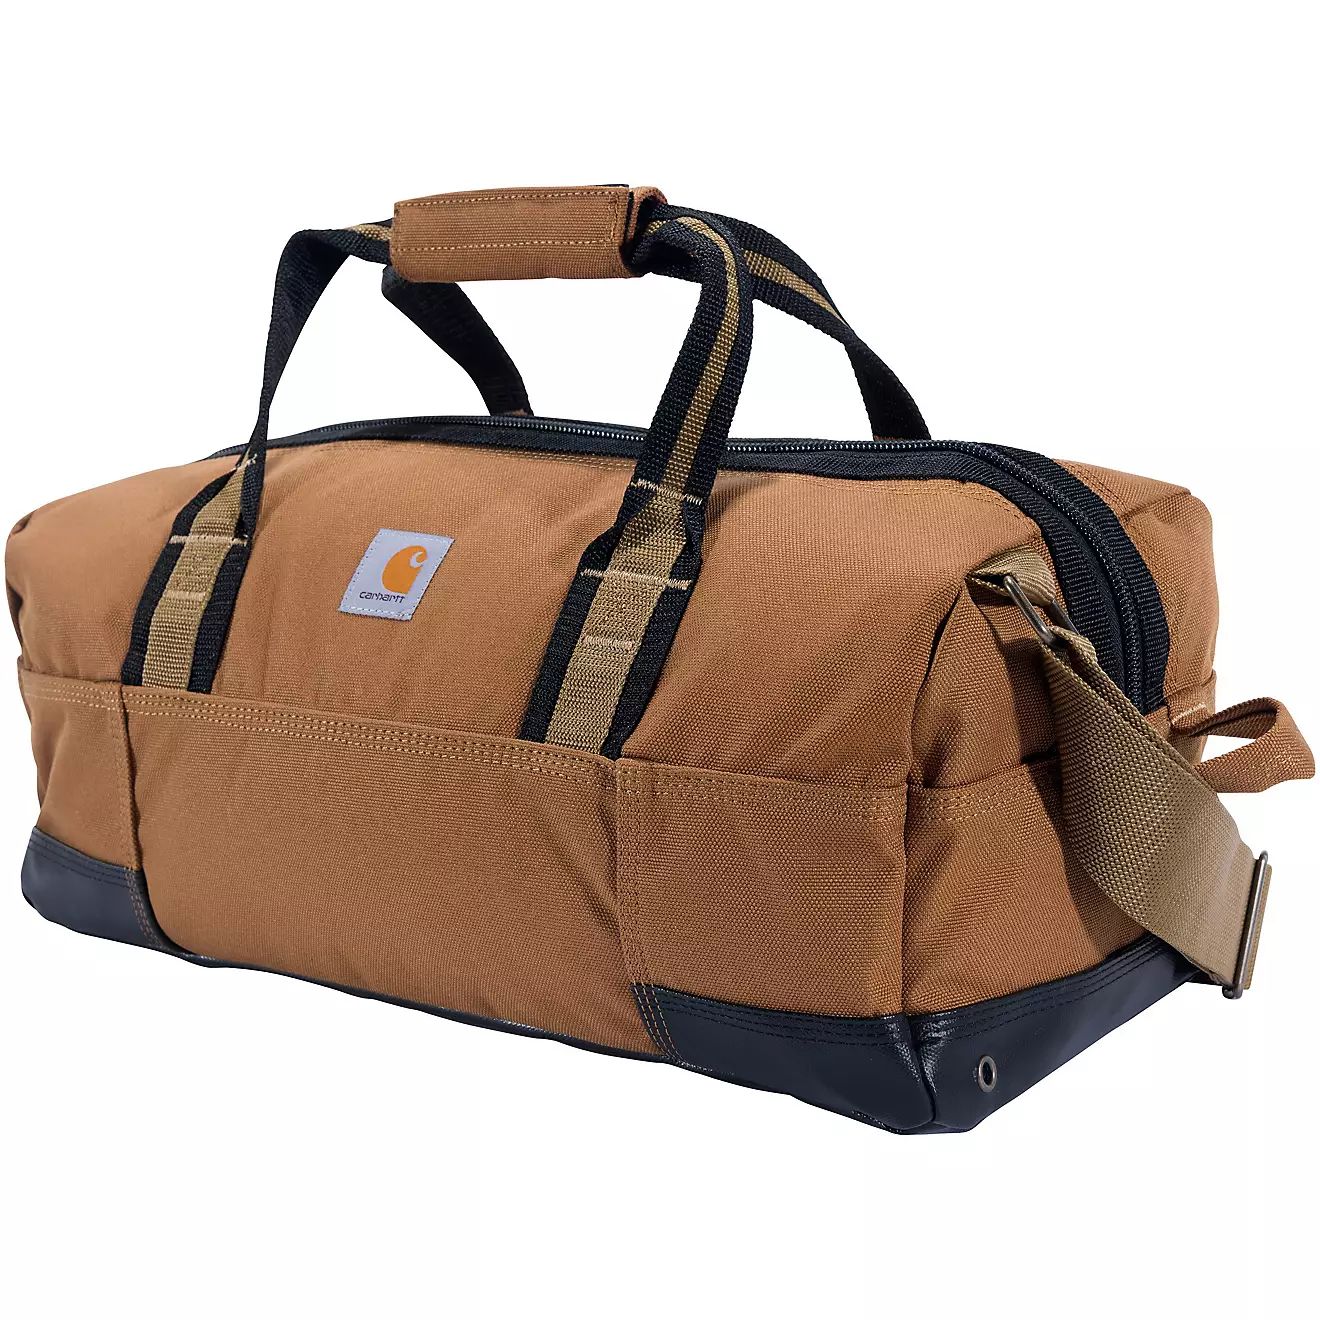 Carhartt Classic 35L Duffel Bag | Academy | Academy Sports + Outdoors